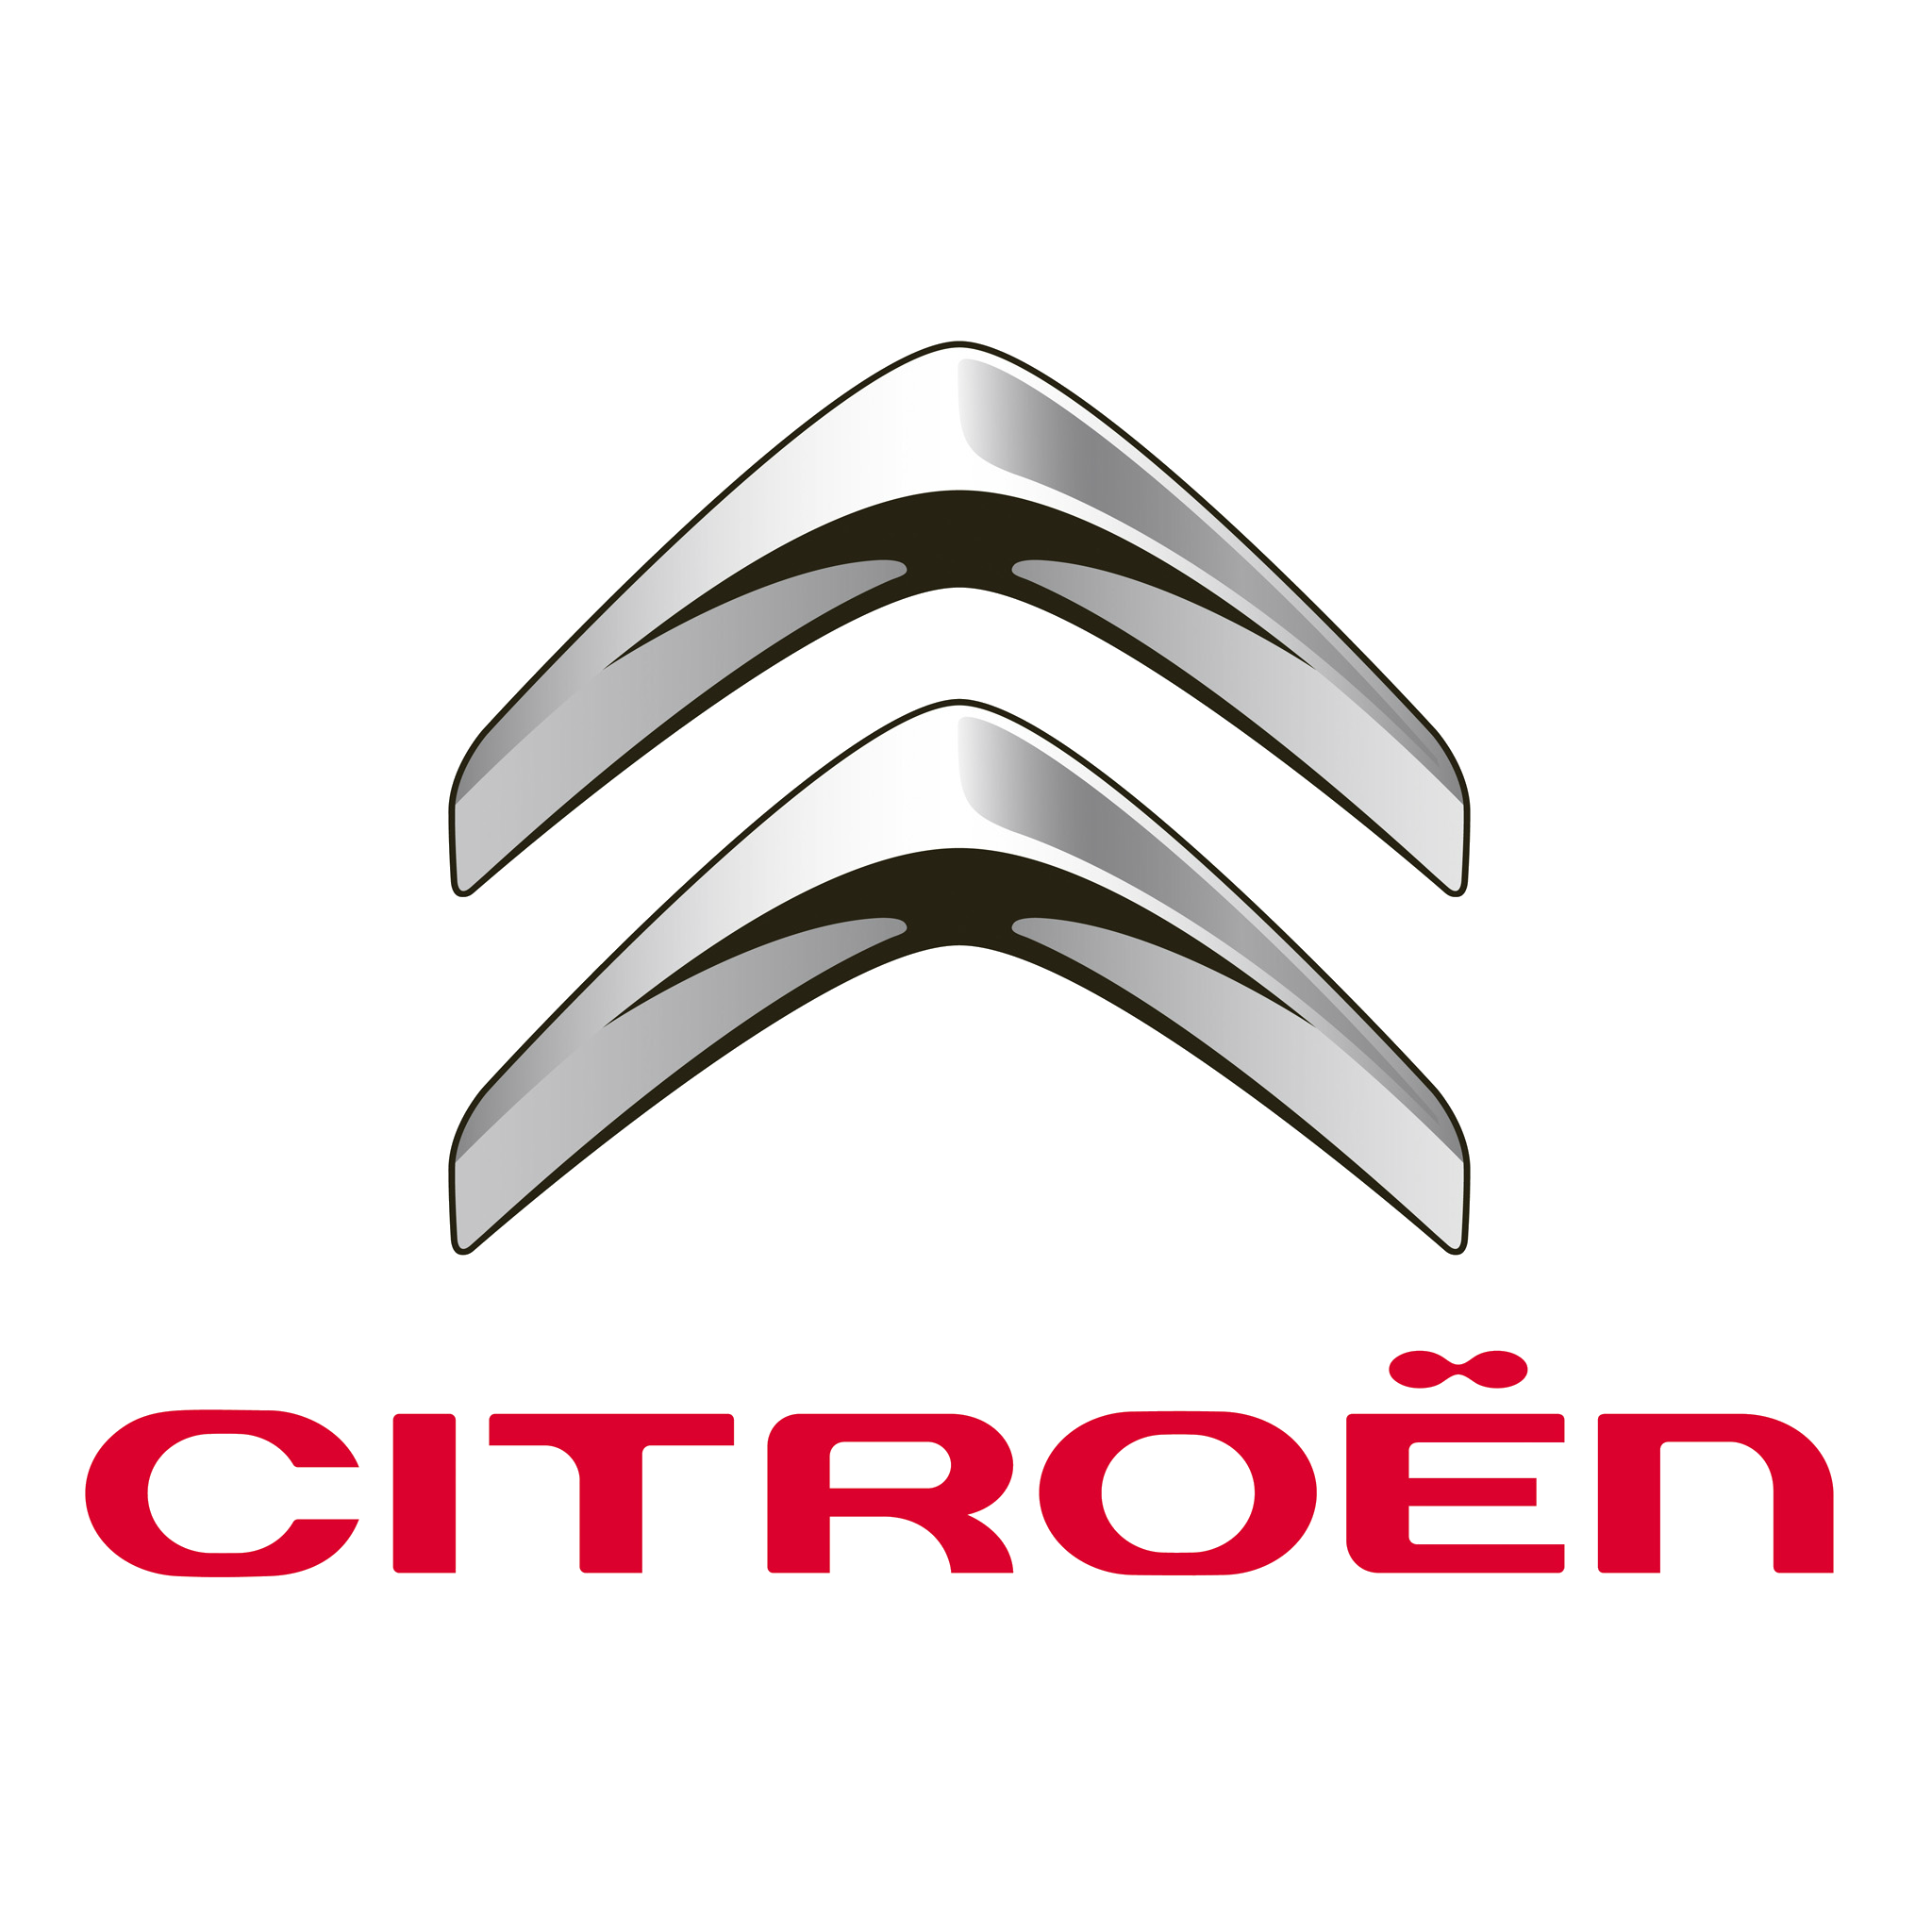 Image result for logo citroen